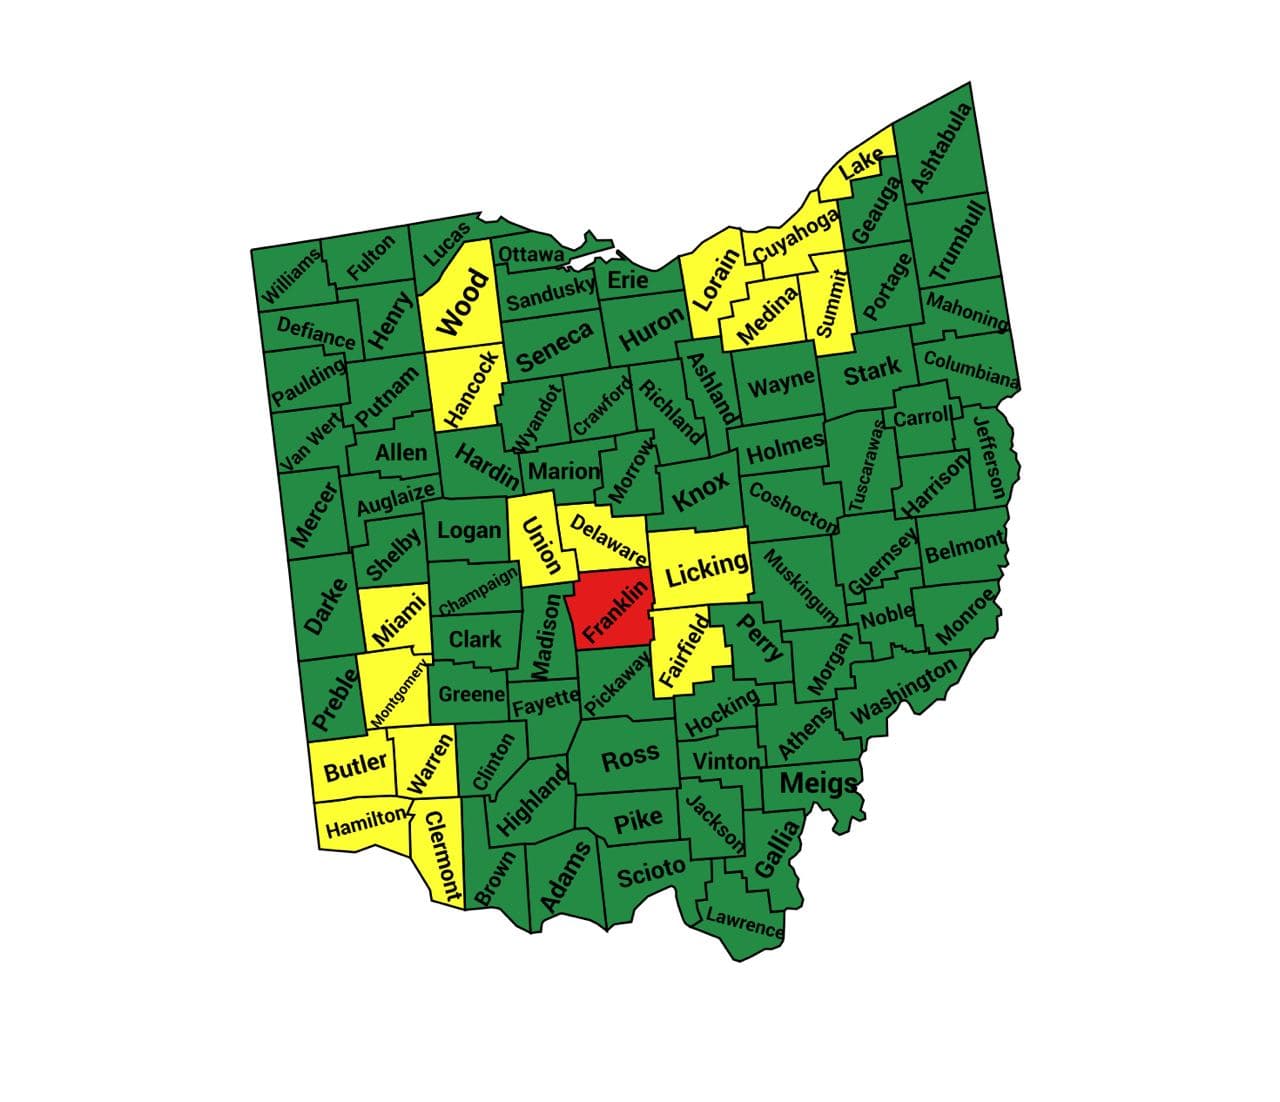 Seth Keshel County Trend Map for Ohio